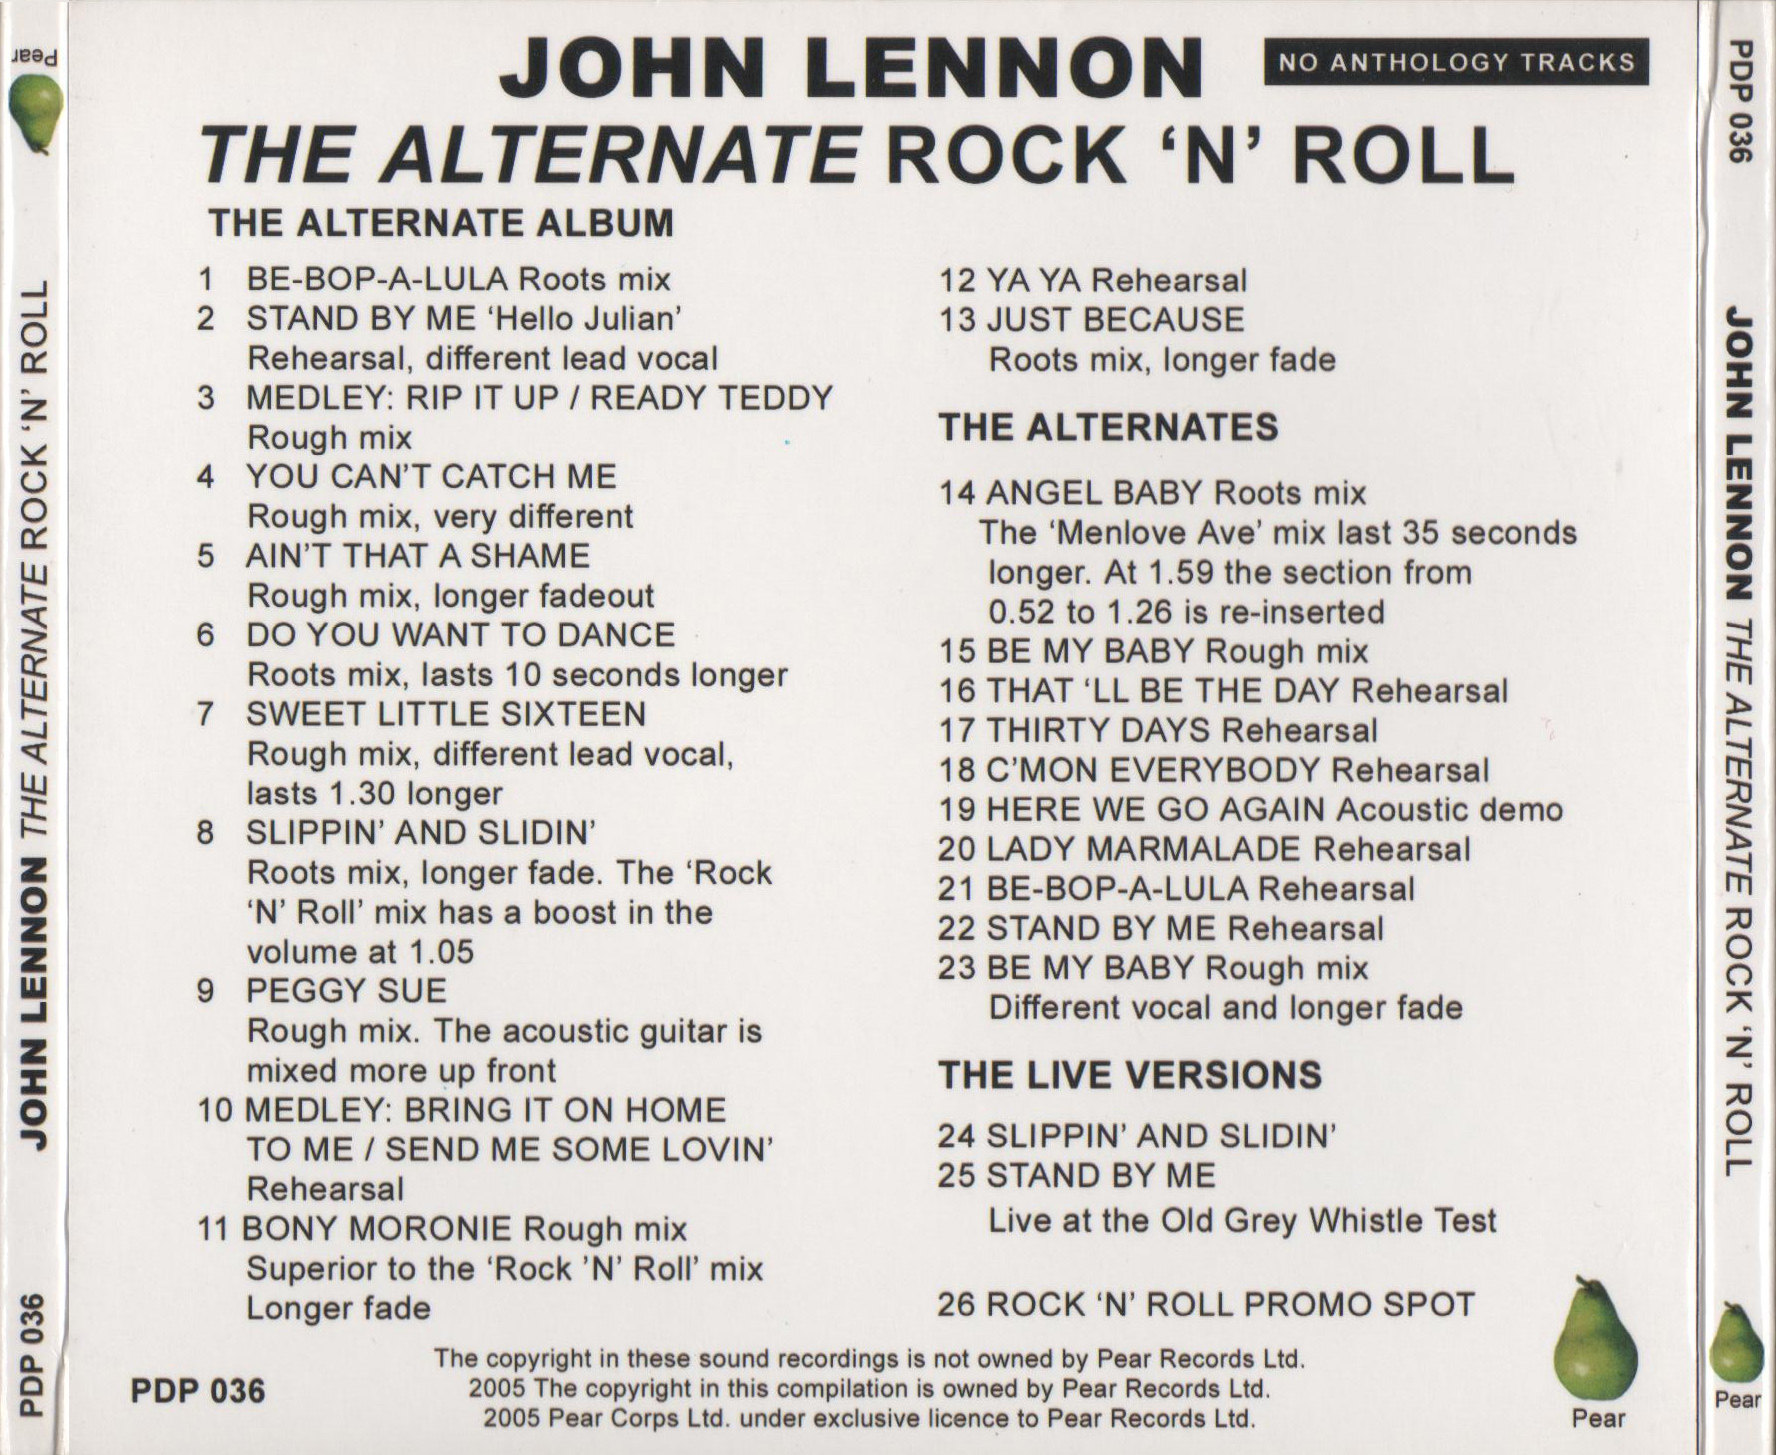 JohnLennon-AlternateRockNRoll (8).jpg